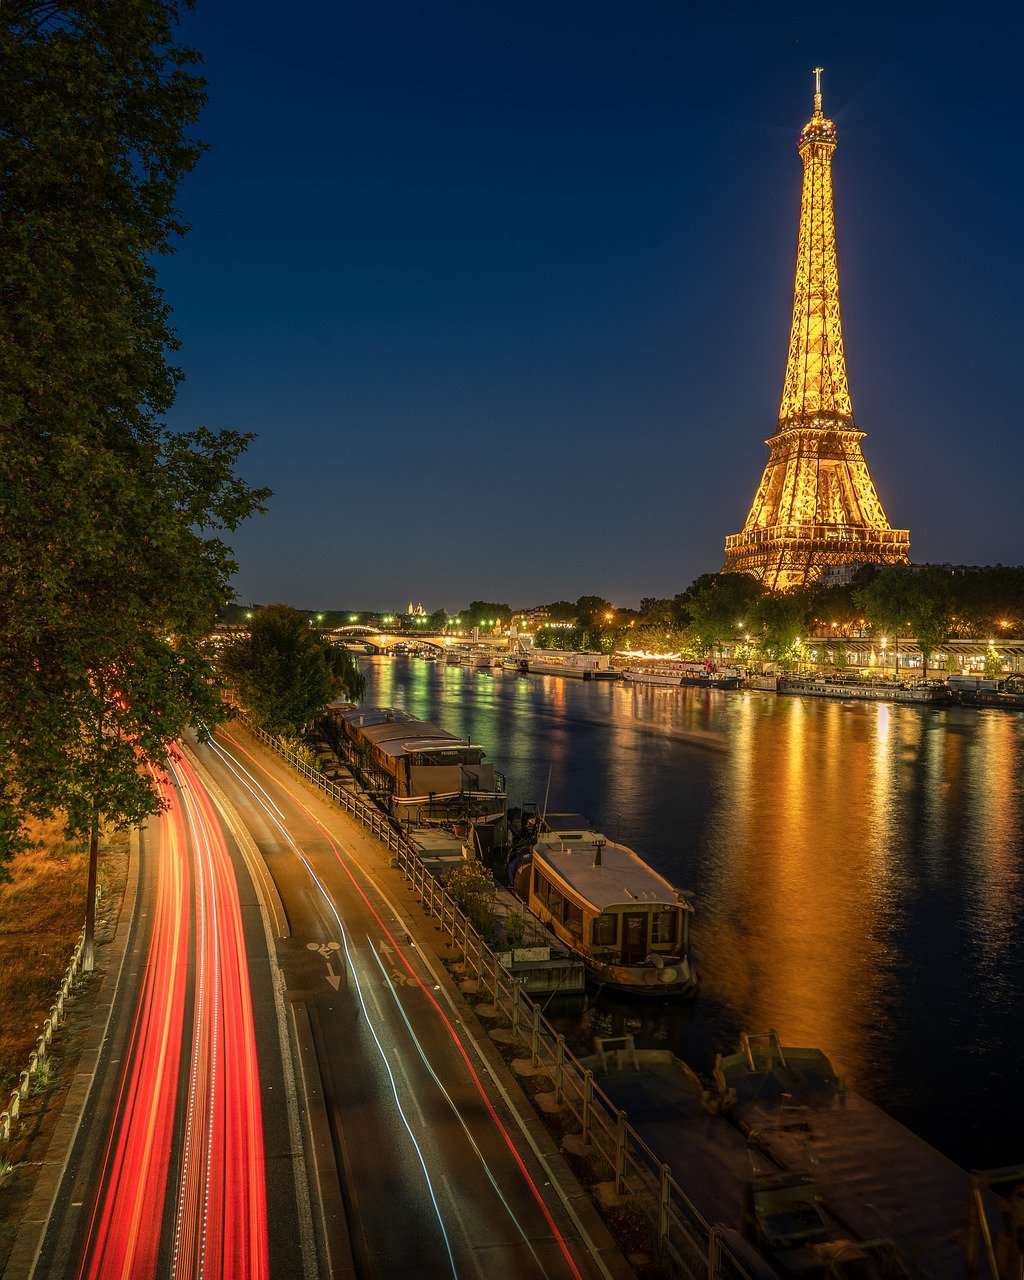 Day 07 - Eiffel Tower (2nd Level) – Disneyland® (Optional) – Illumination Tour of Paris (Optional)